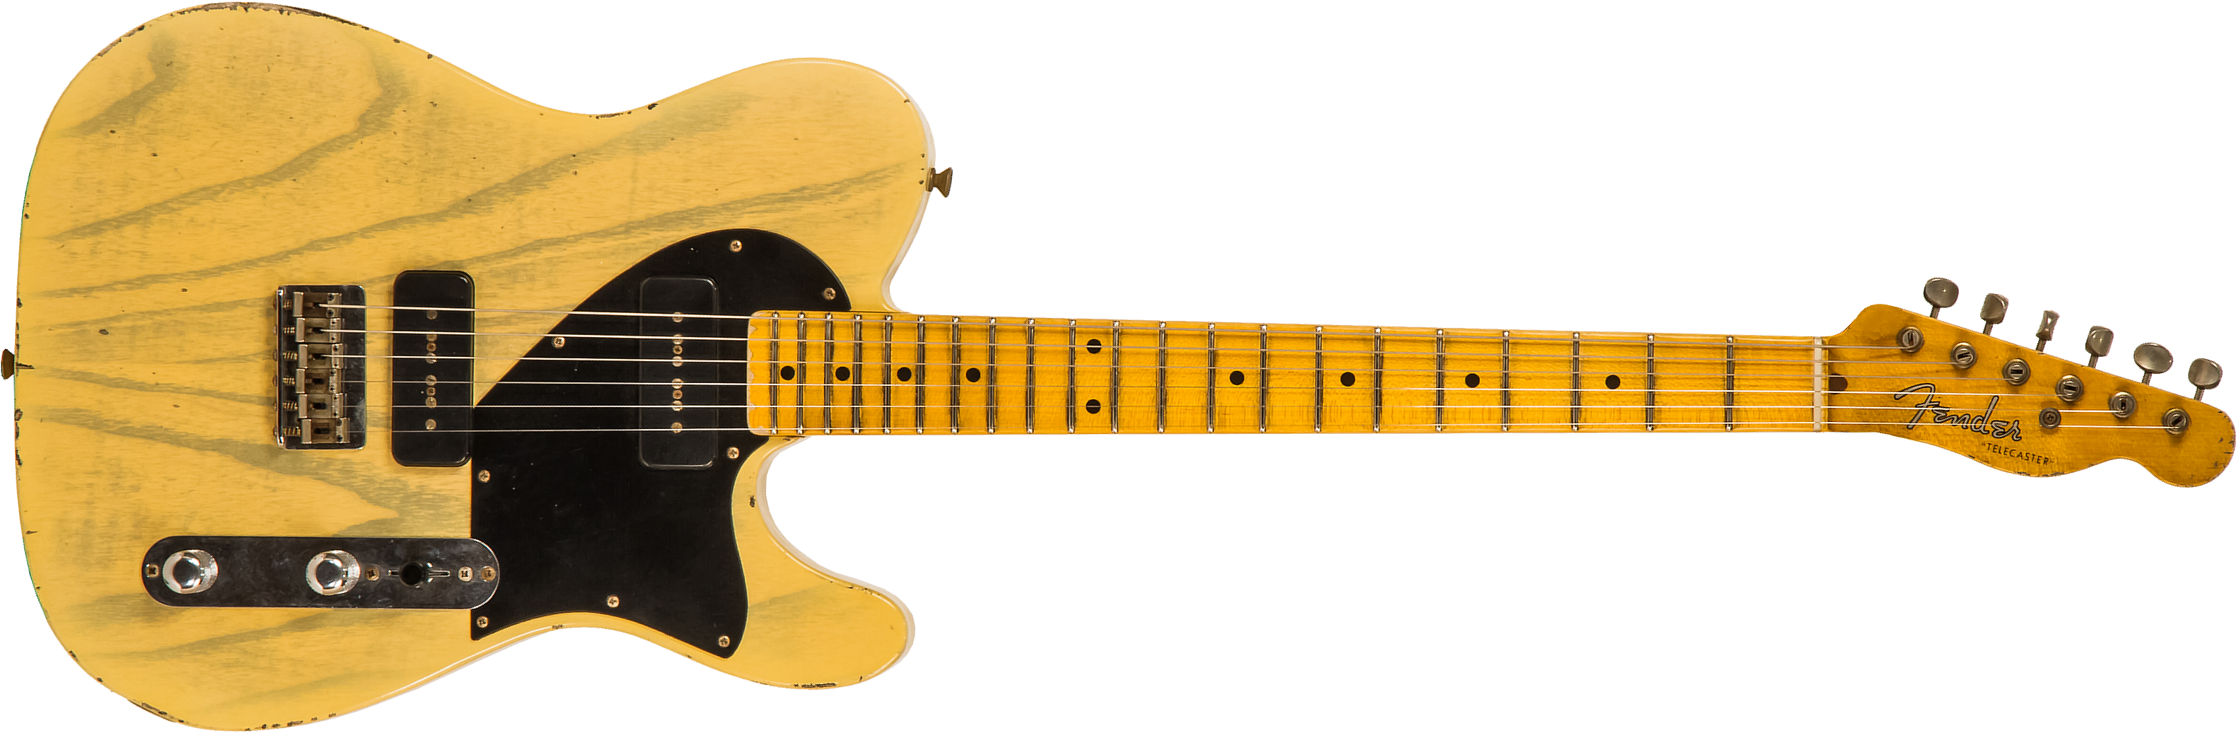 Fender Custom Shop Tele 1950 Masterbuilt J.smith Mn #r116221 - Relic Nocaster Blonde - Televorm elektrische gitaar - Main picture